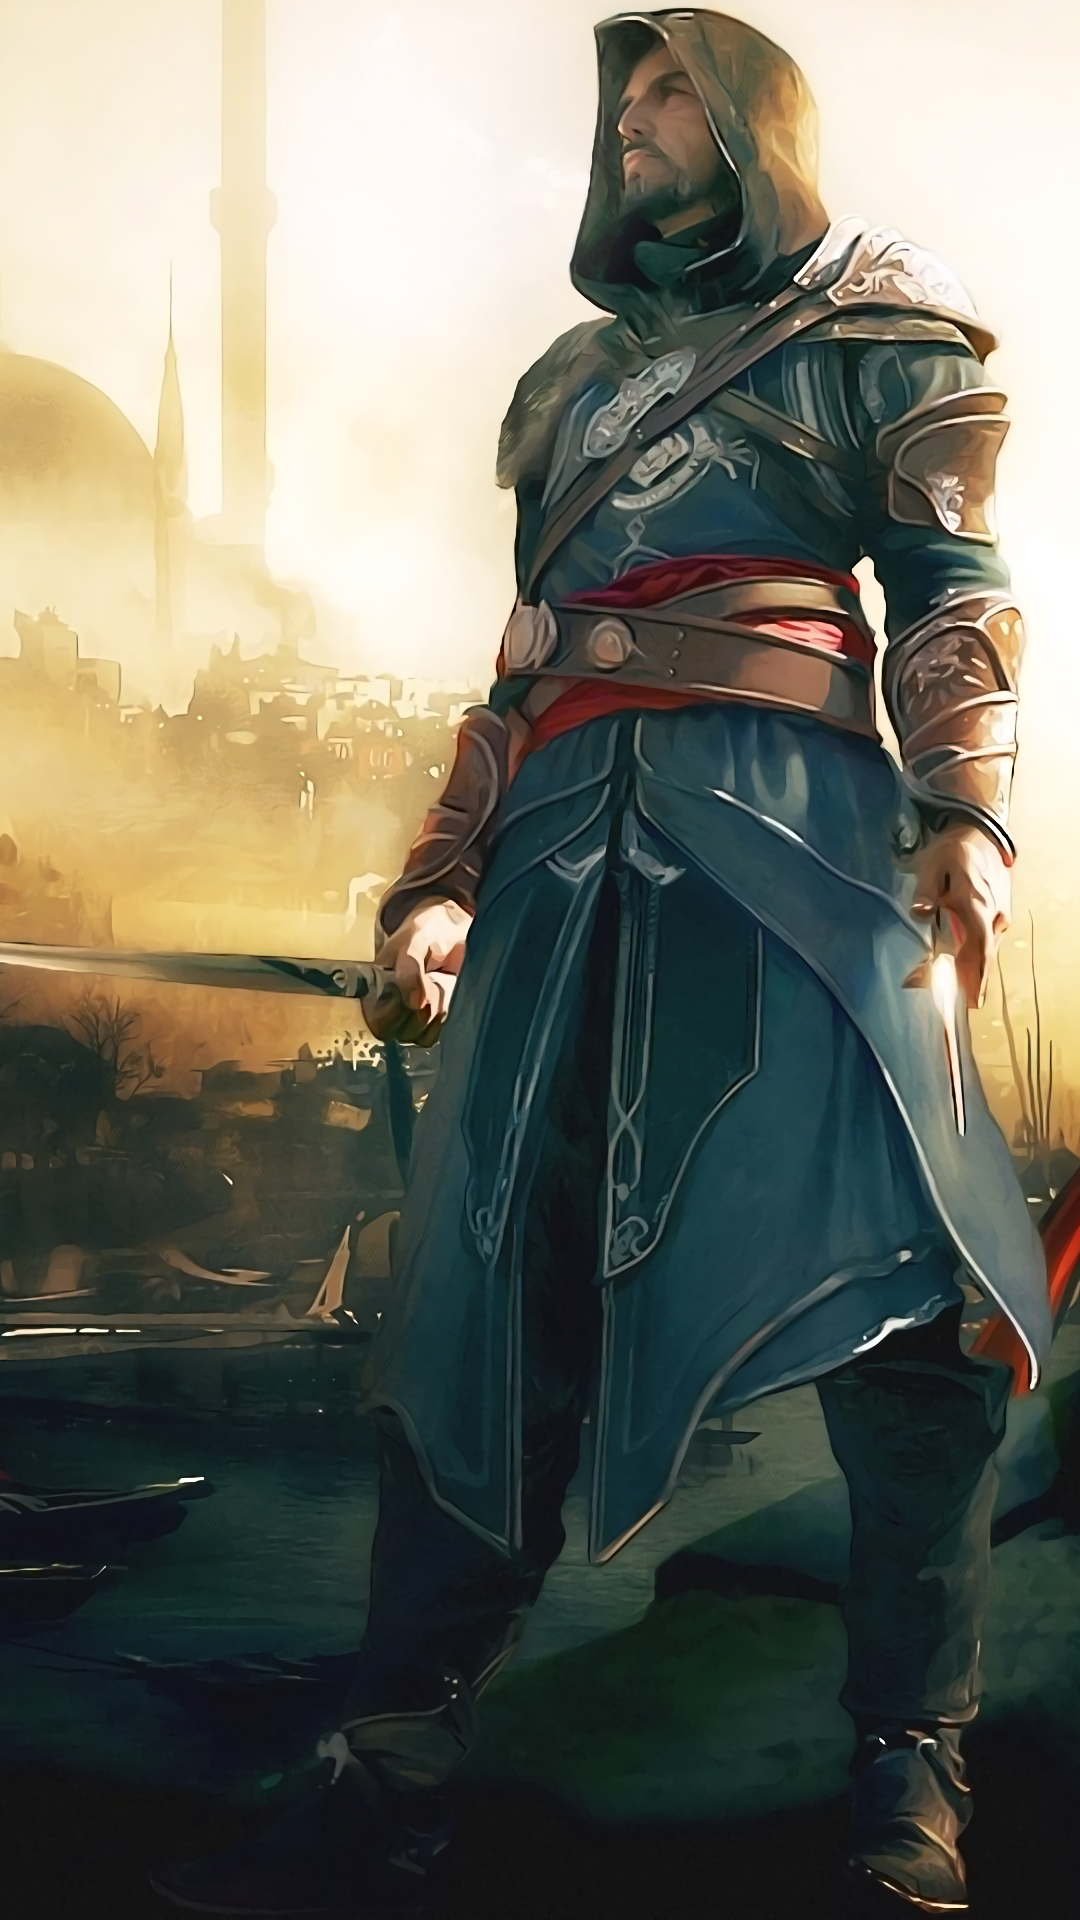 Android Assassin's Creed Wallpaper Hd - HD Wallpaper 